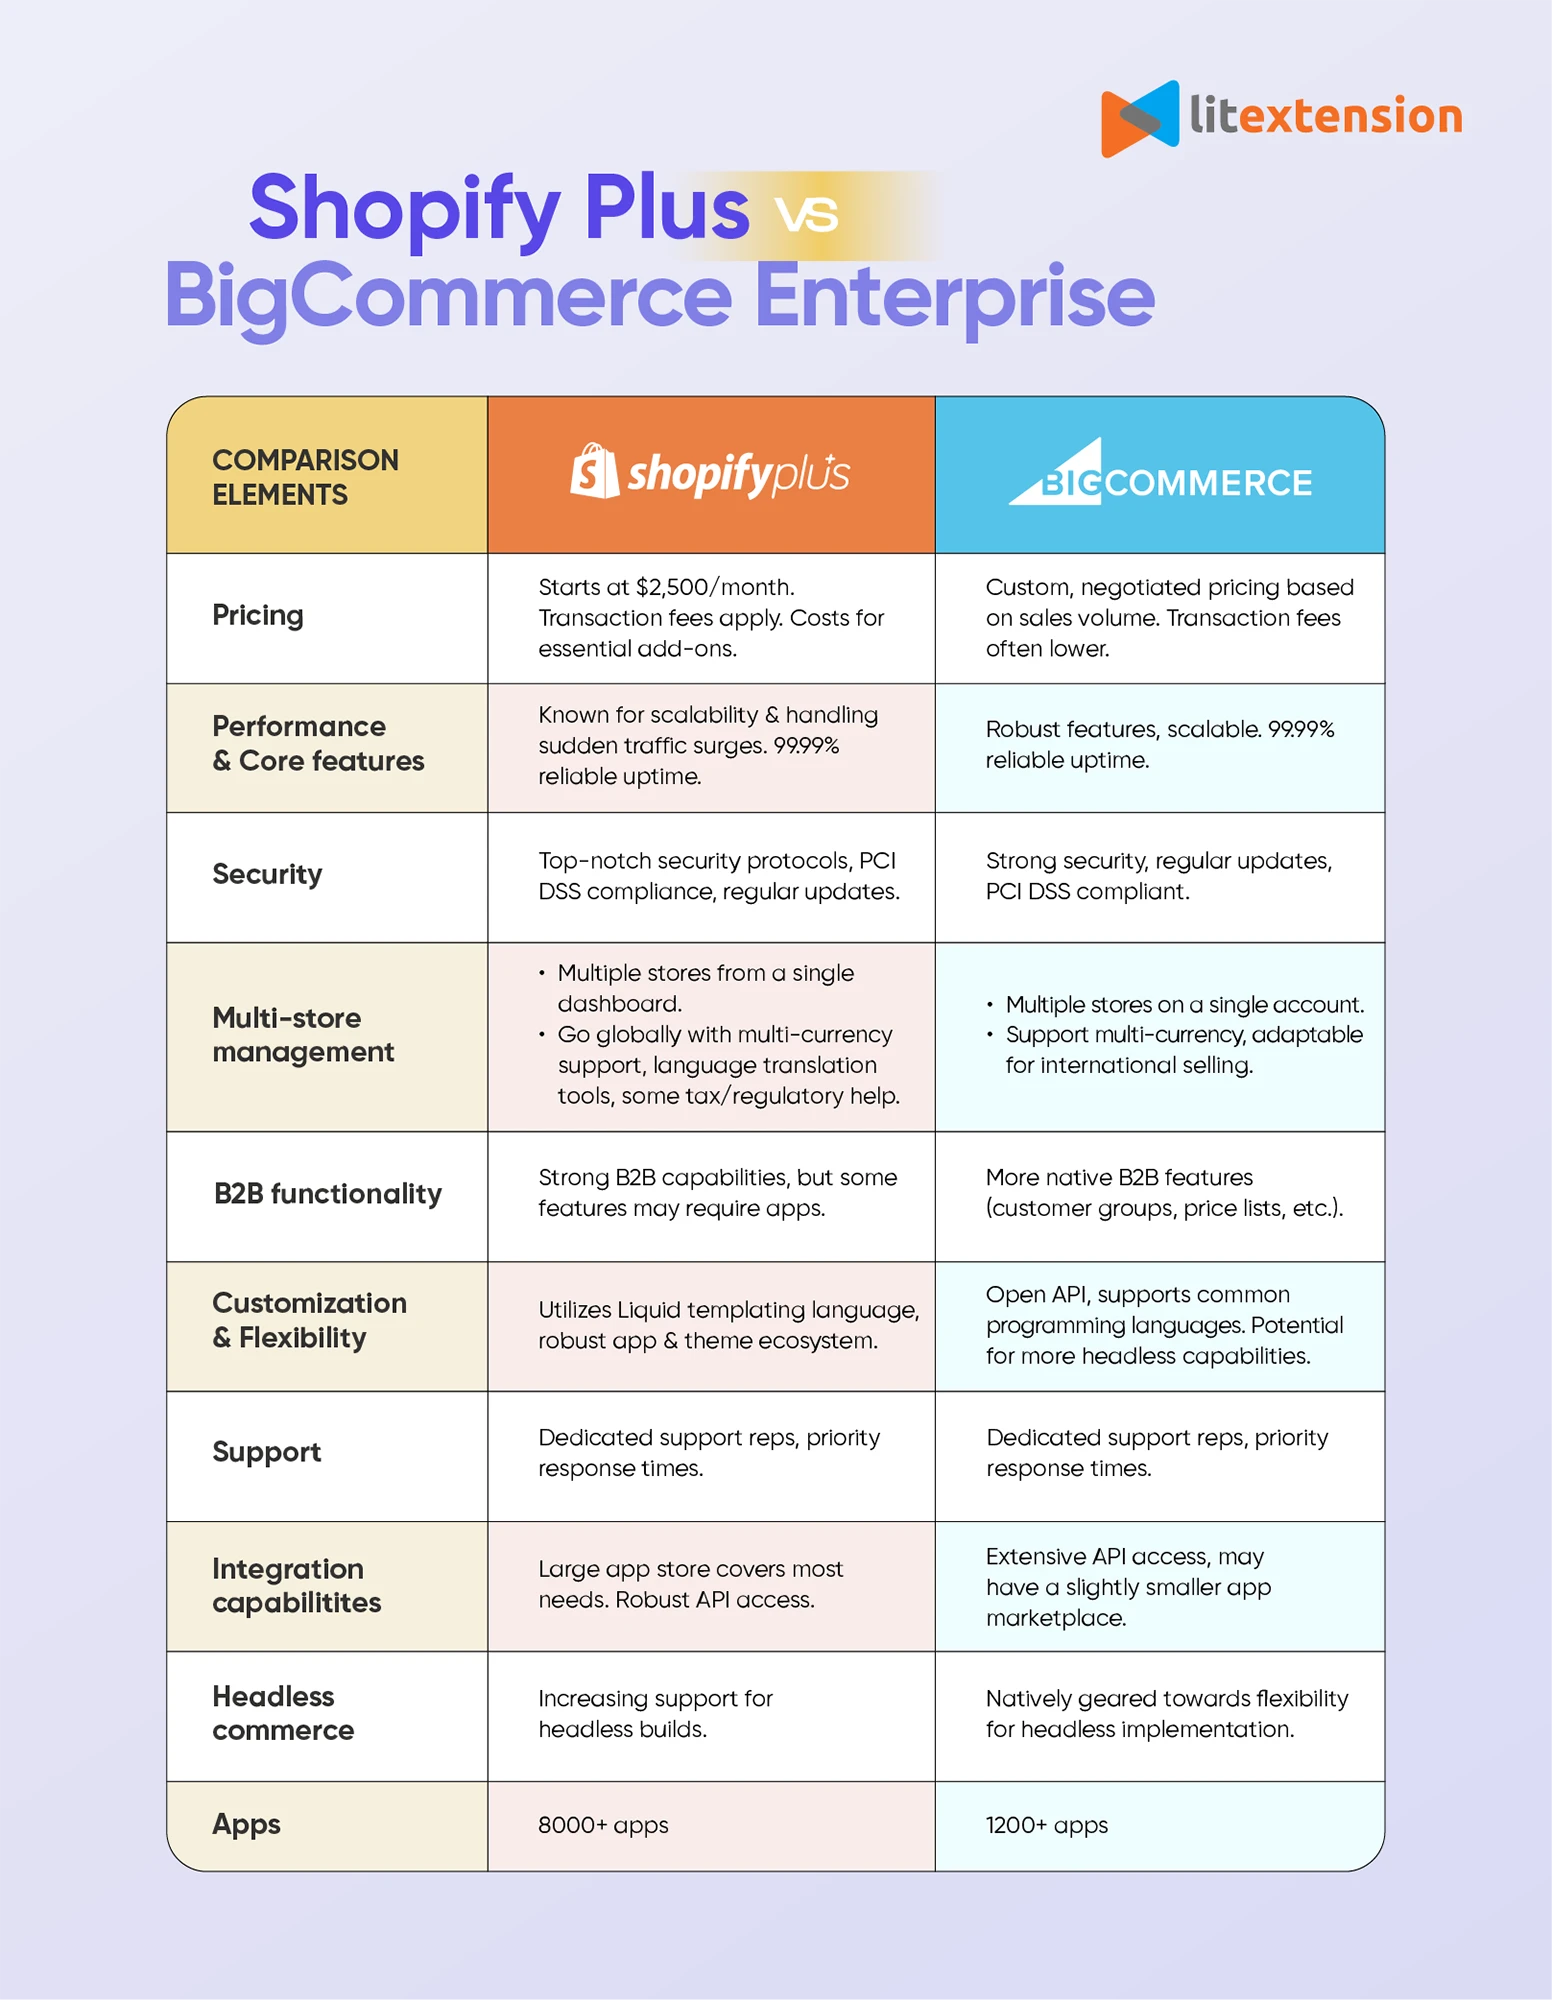 shopify plus vs bigcommerce enterprise infographic